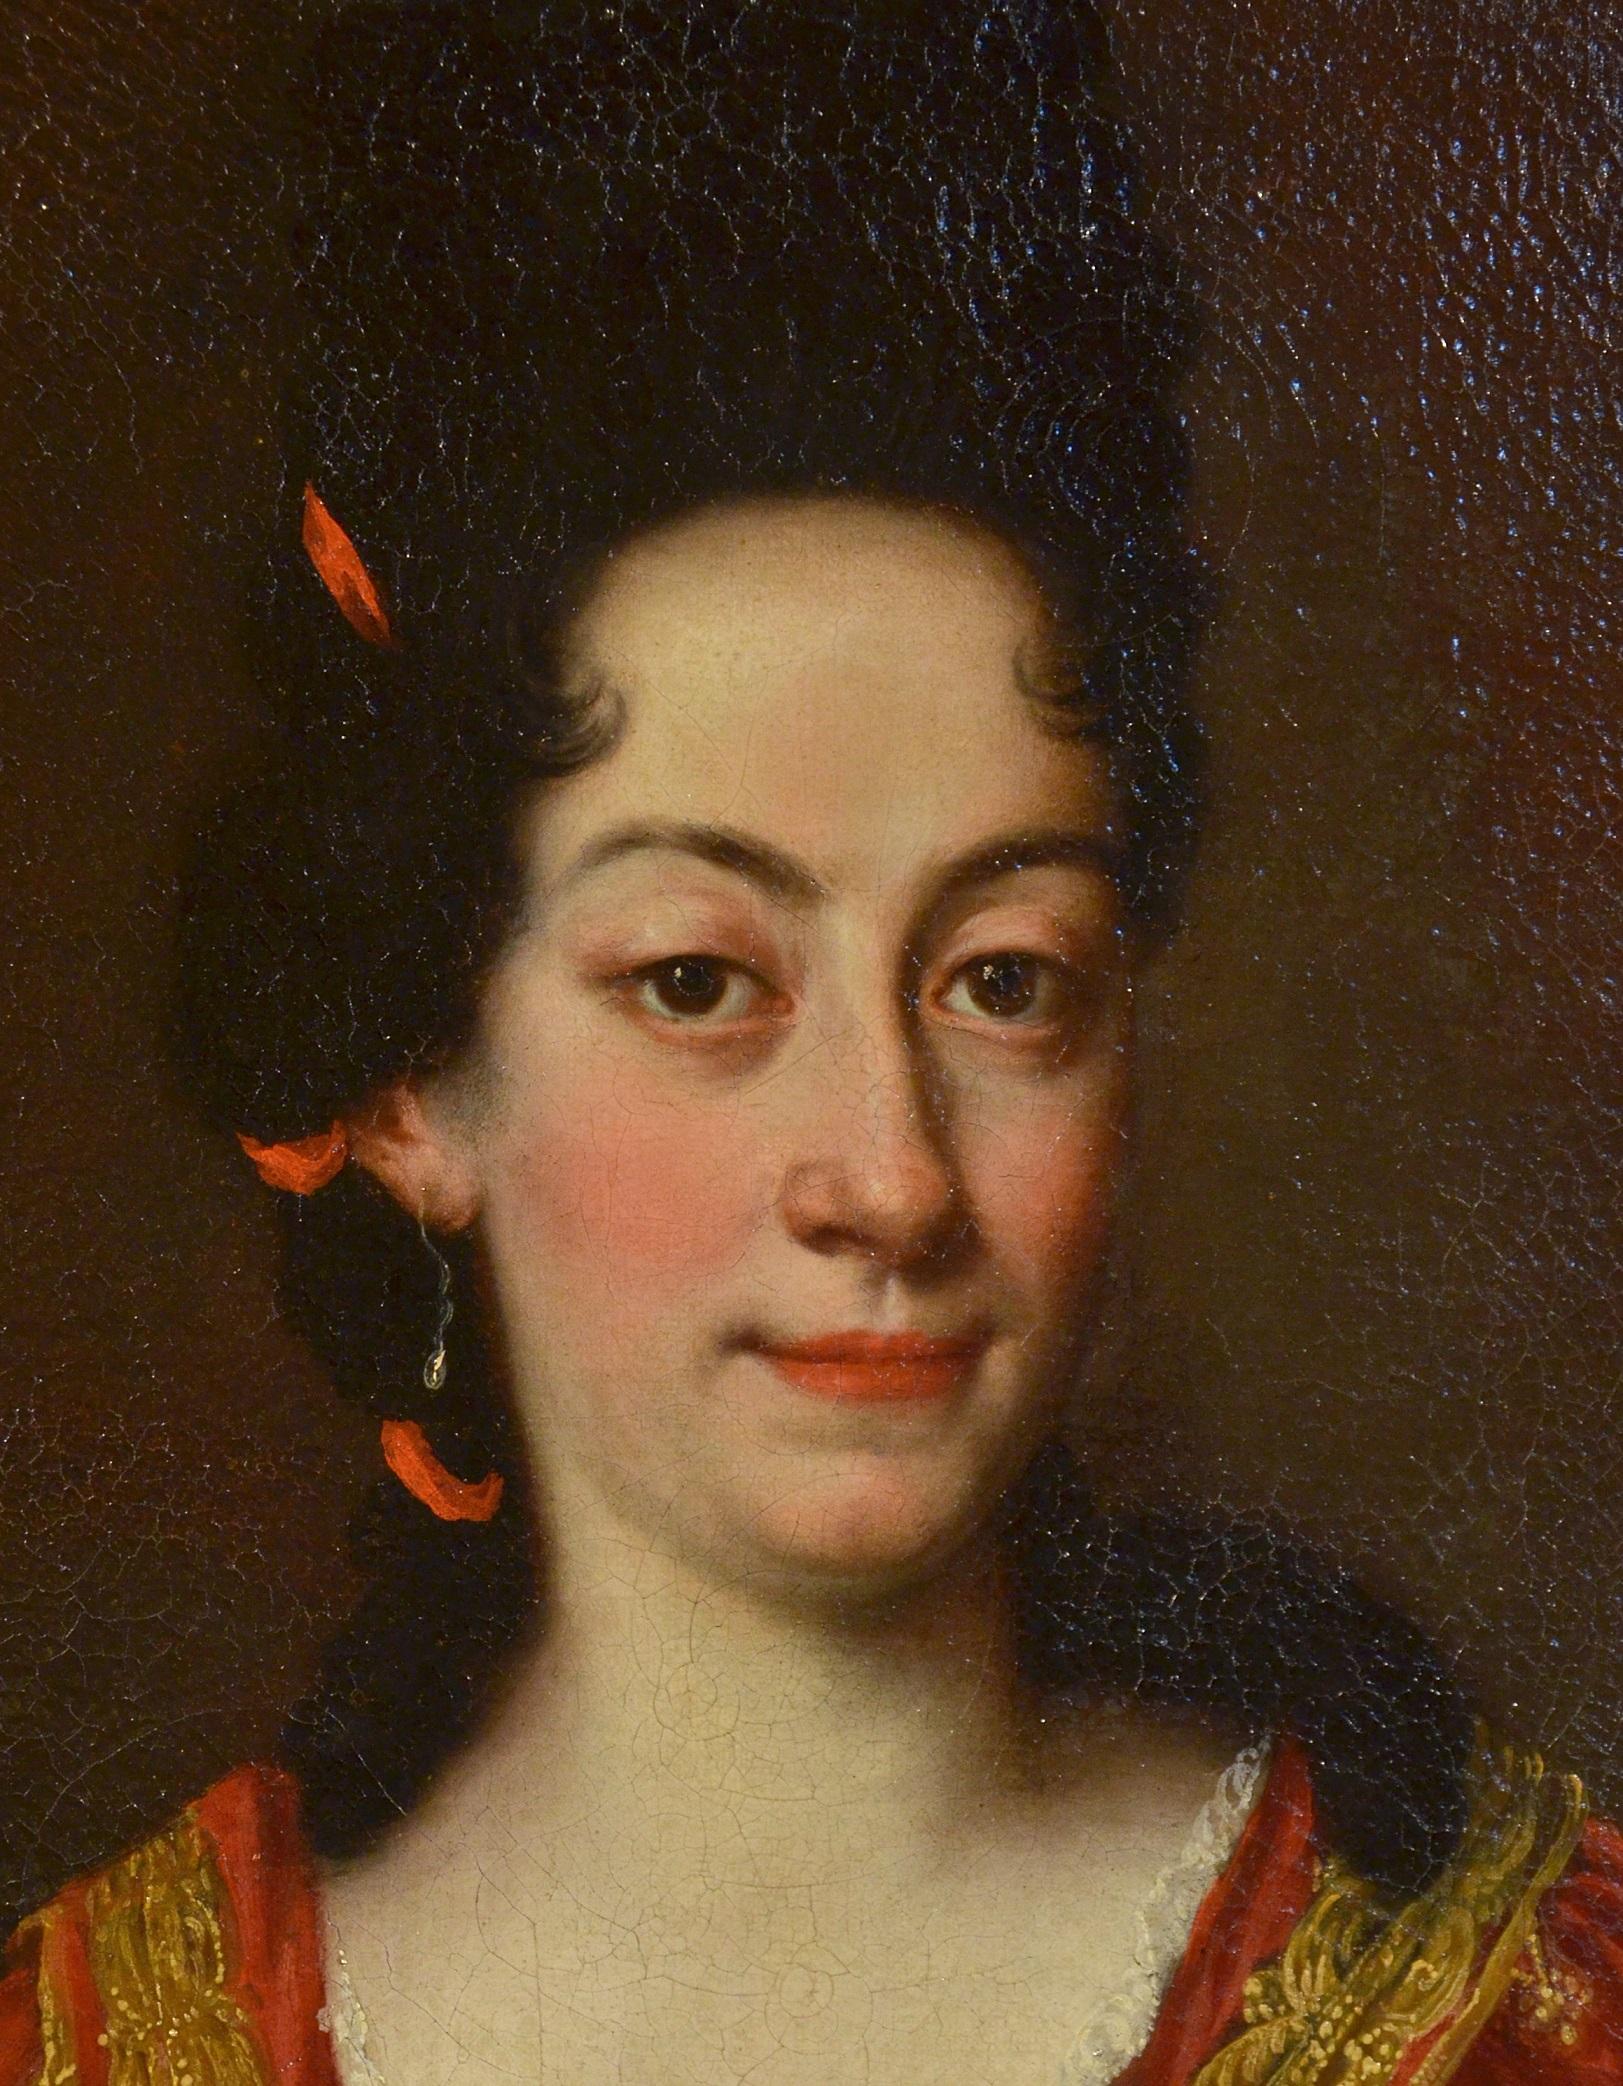 1700s paintings of women